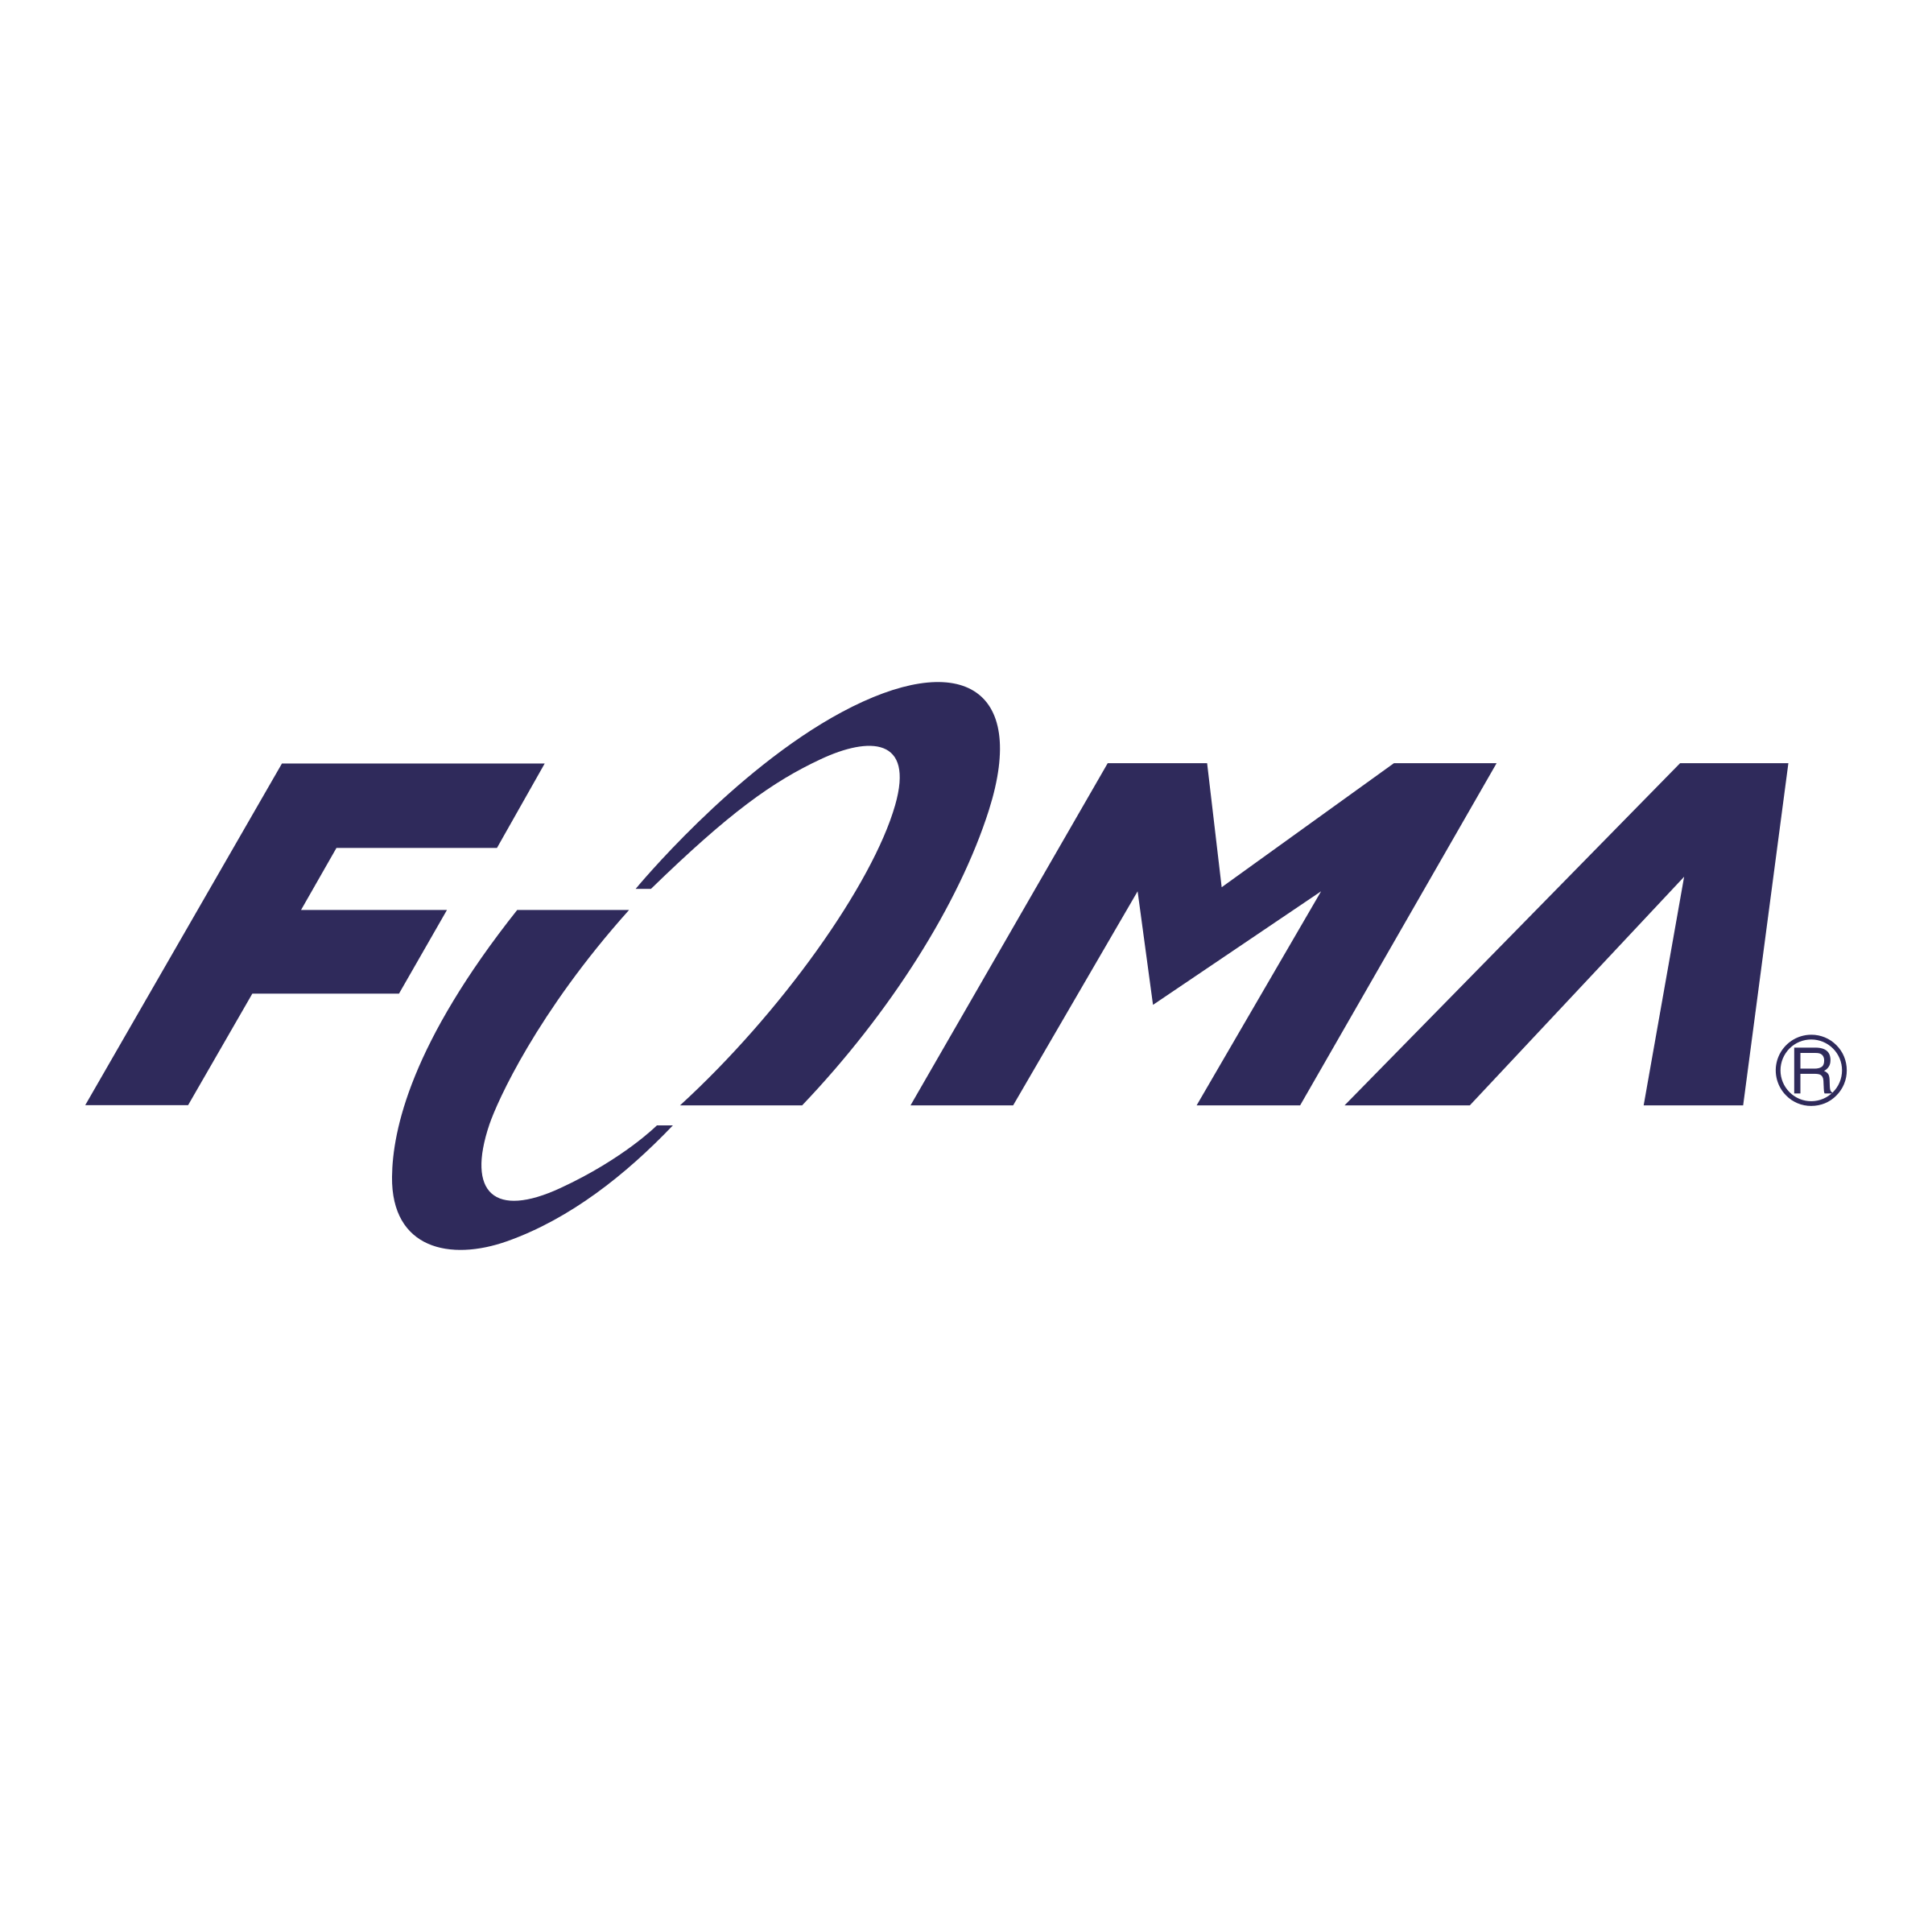 Foma Logo - FOMA Logo PNG Transparent & SVG Vector - Freebie Supply